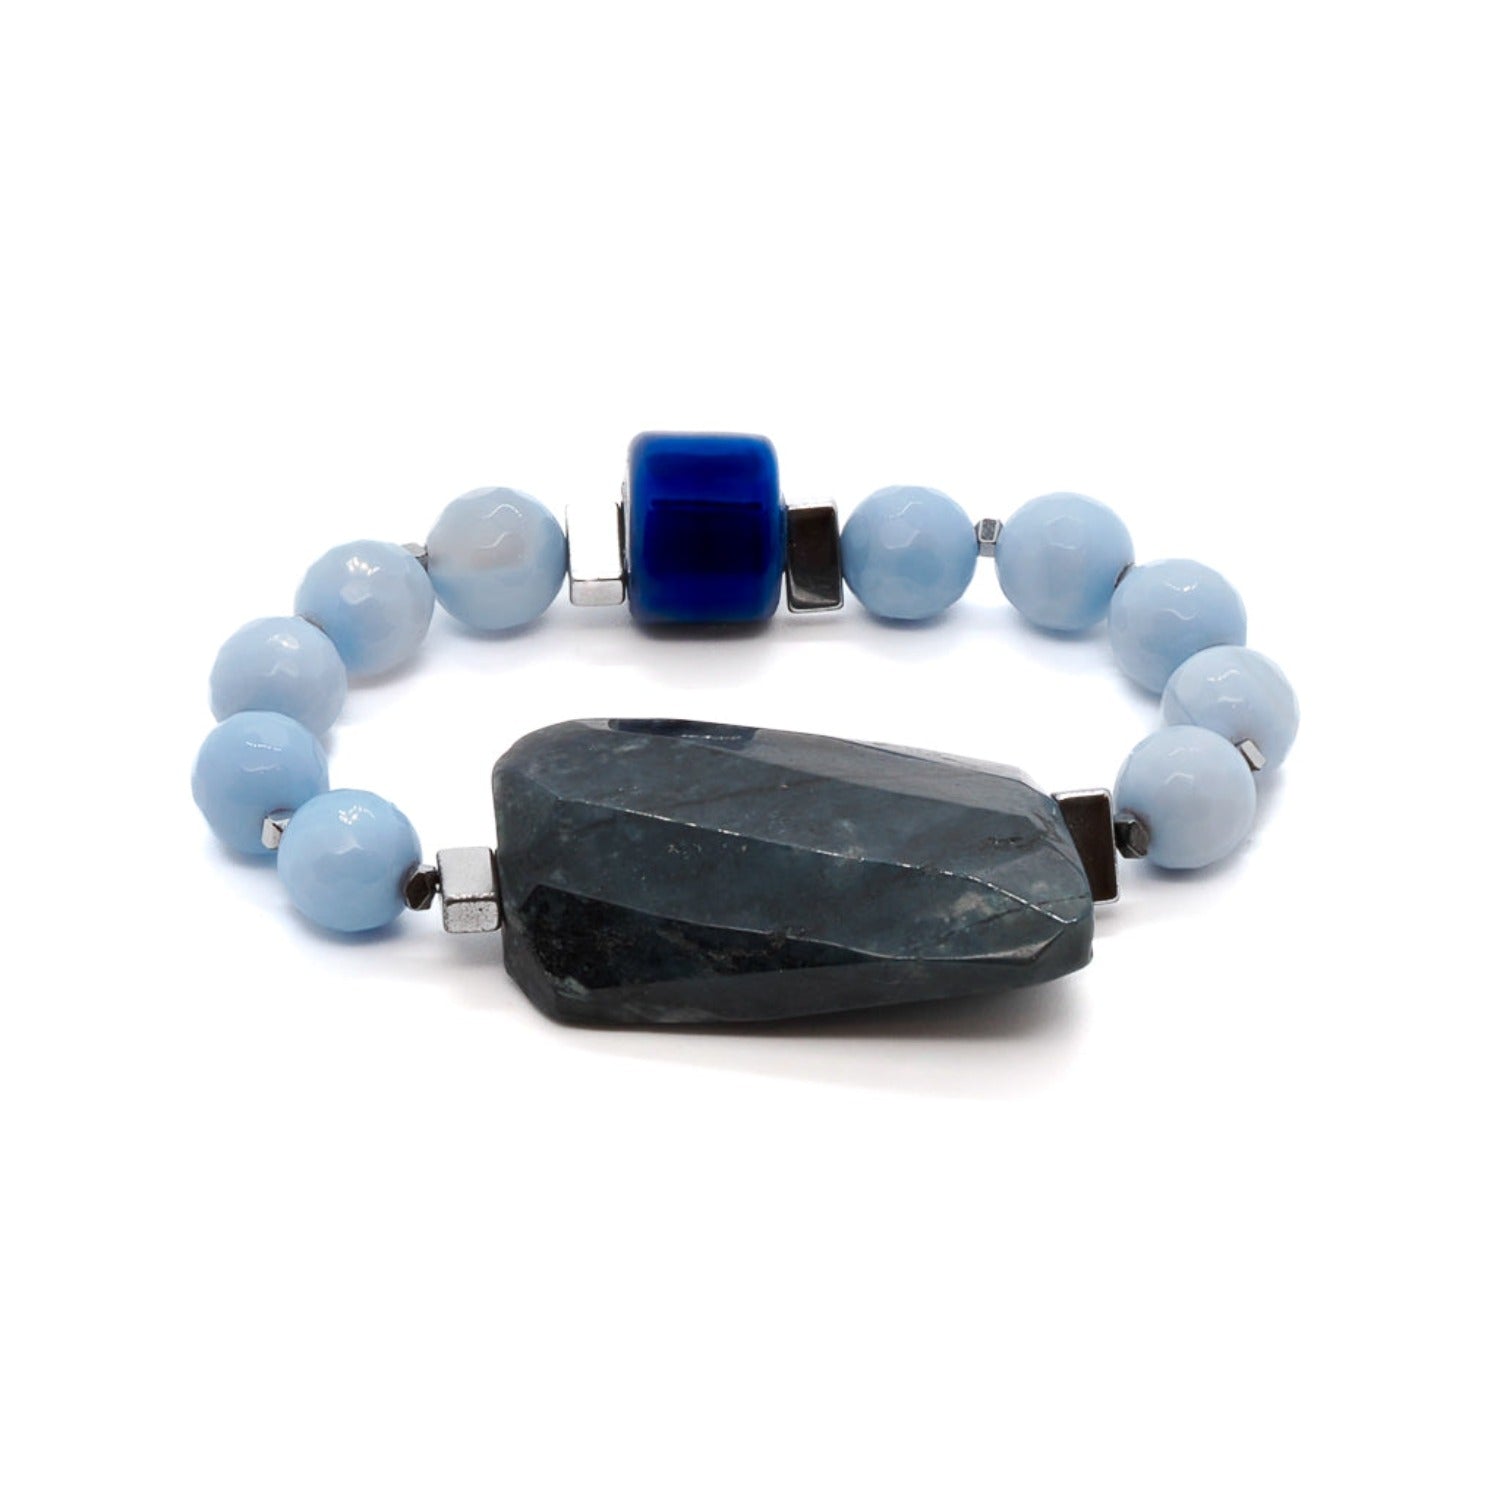 Blue Sky Bracelet with Blue Lace Agate, Hematite, and Jasper Stones